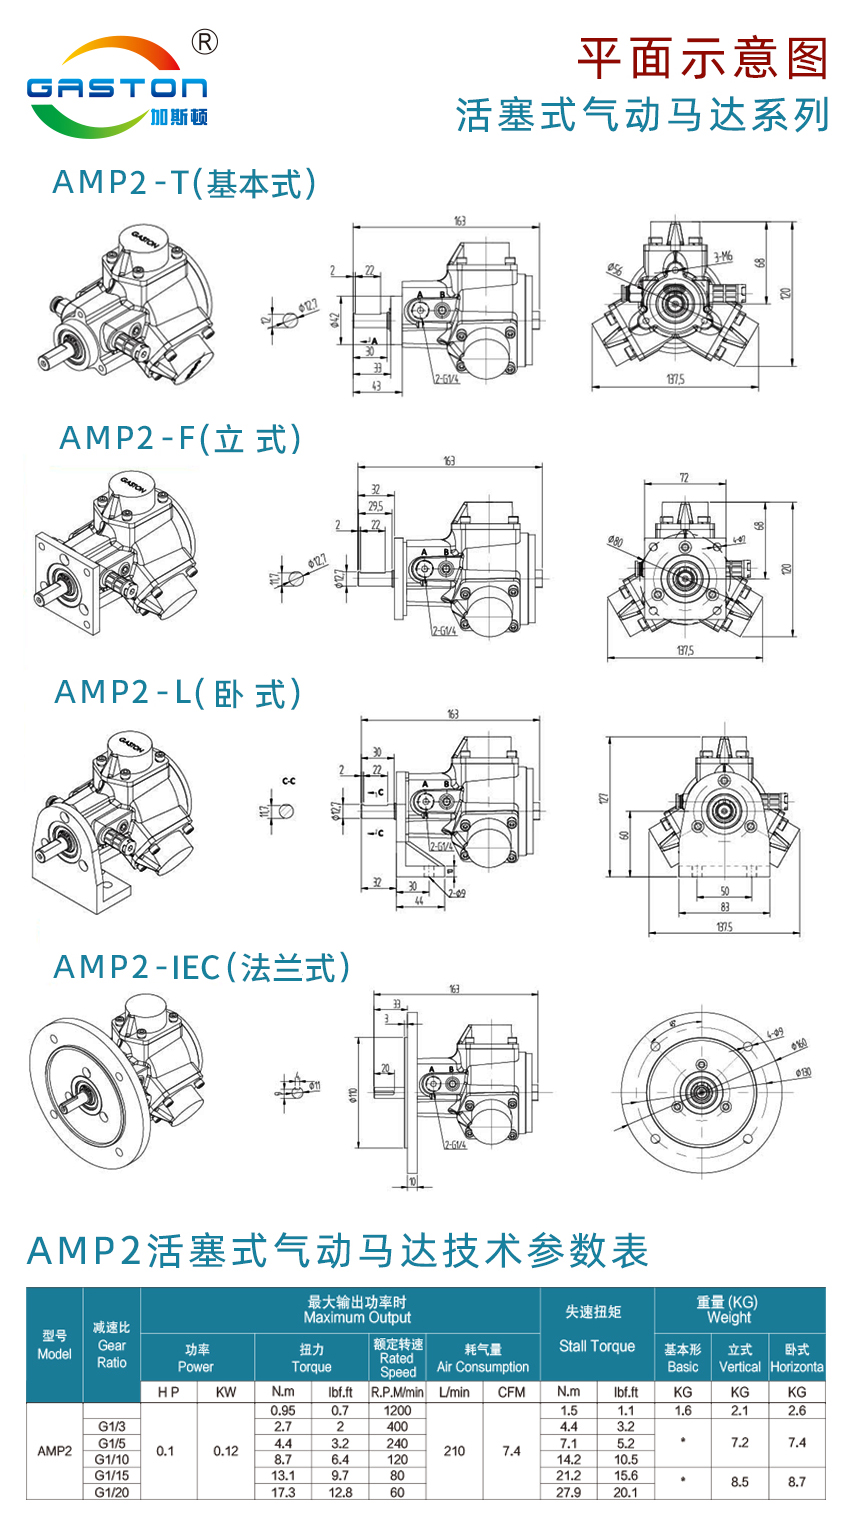 AMP2-F_14.jpg